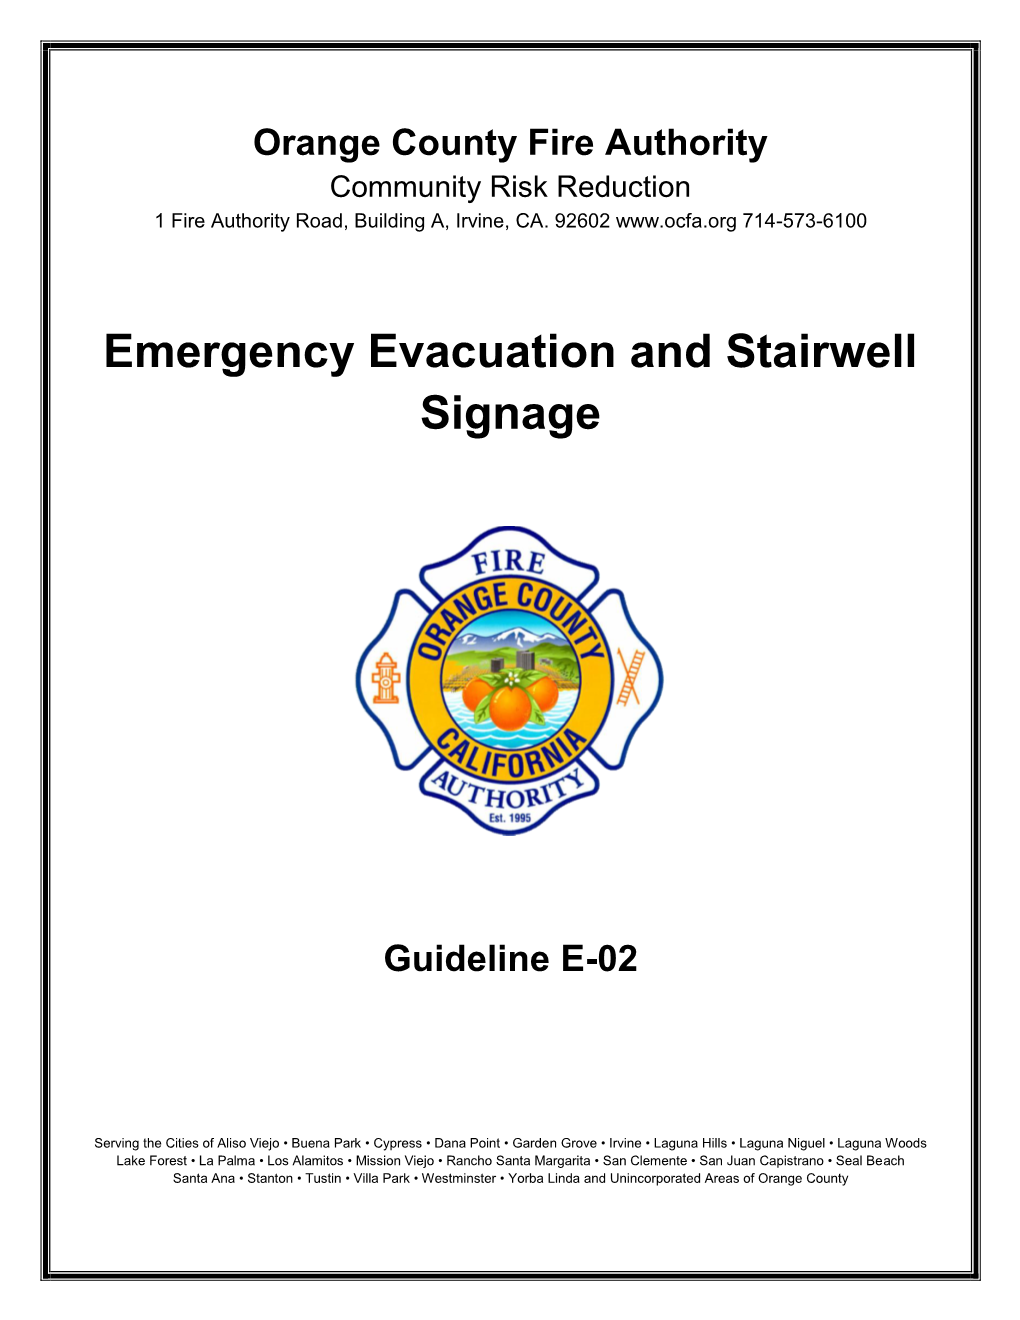 Emergency Evacuation and Stairwell Signage: E-02 July 1, 2020